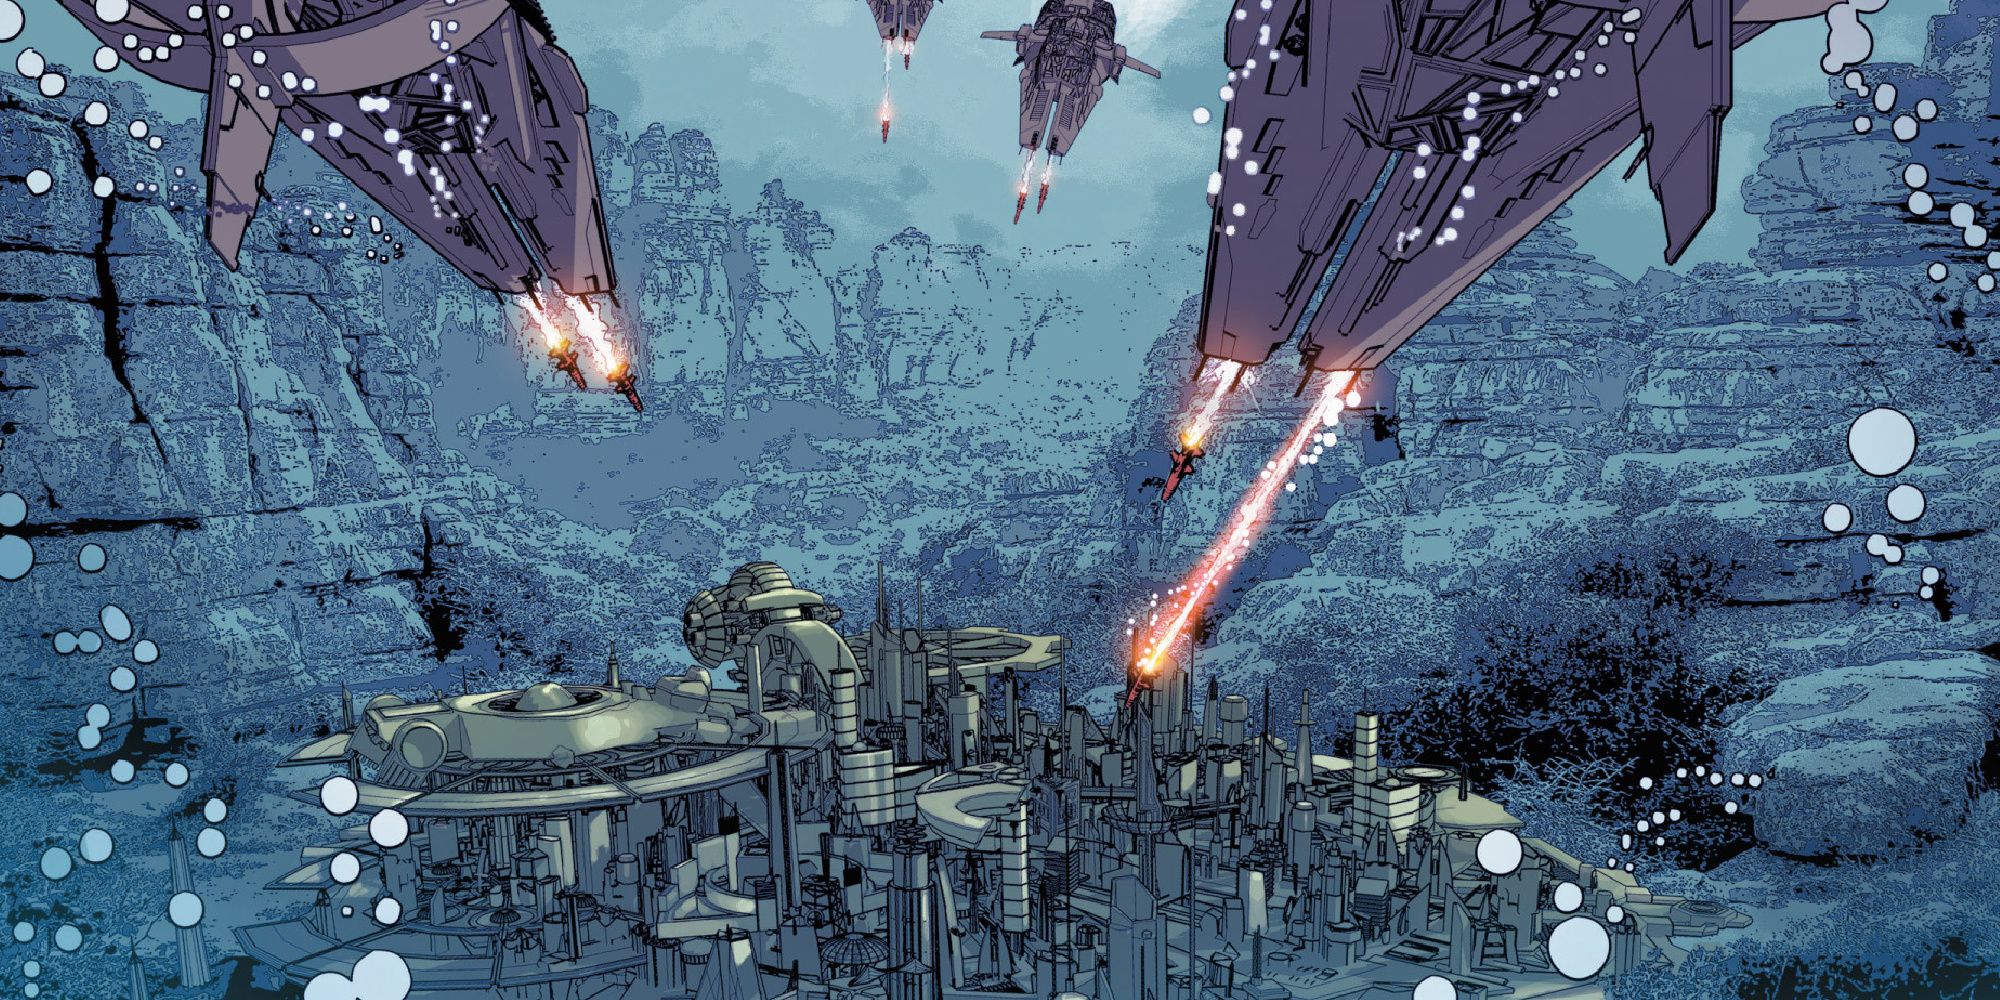 Wakanda atttacks Atlantis in Marvel Comics.